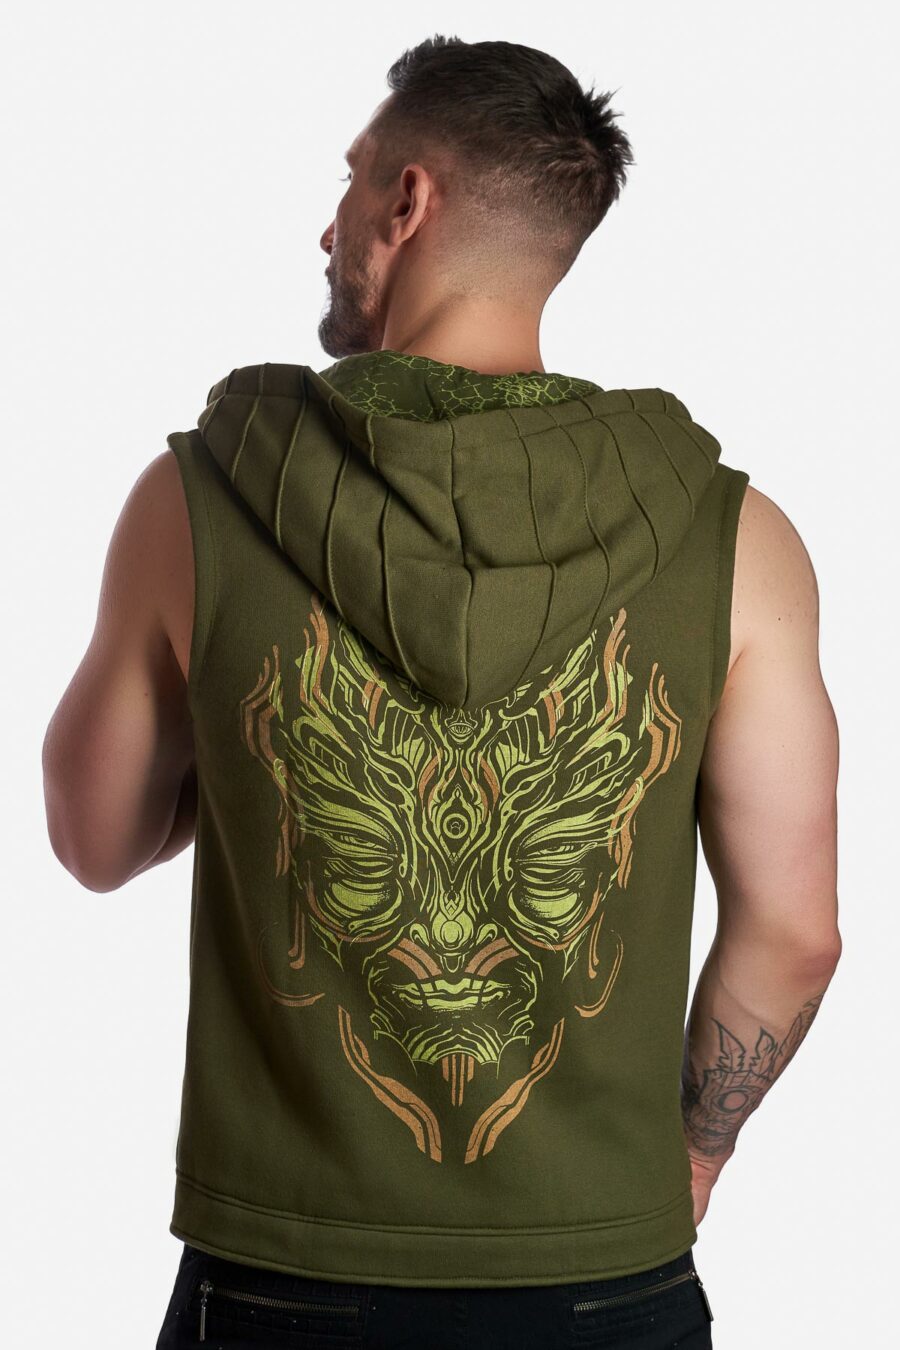 inter-dimensional-being-hooded-vest-green-for-men-handmade-art-print-screen-printed-lining-alternative-streetwear-festival-fashion-psy-wear-avanyah-clothing